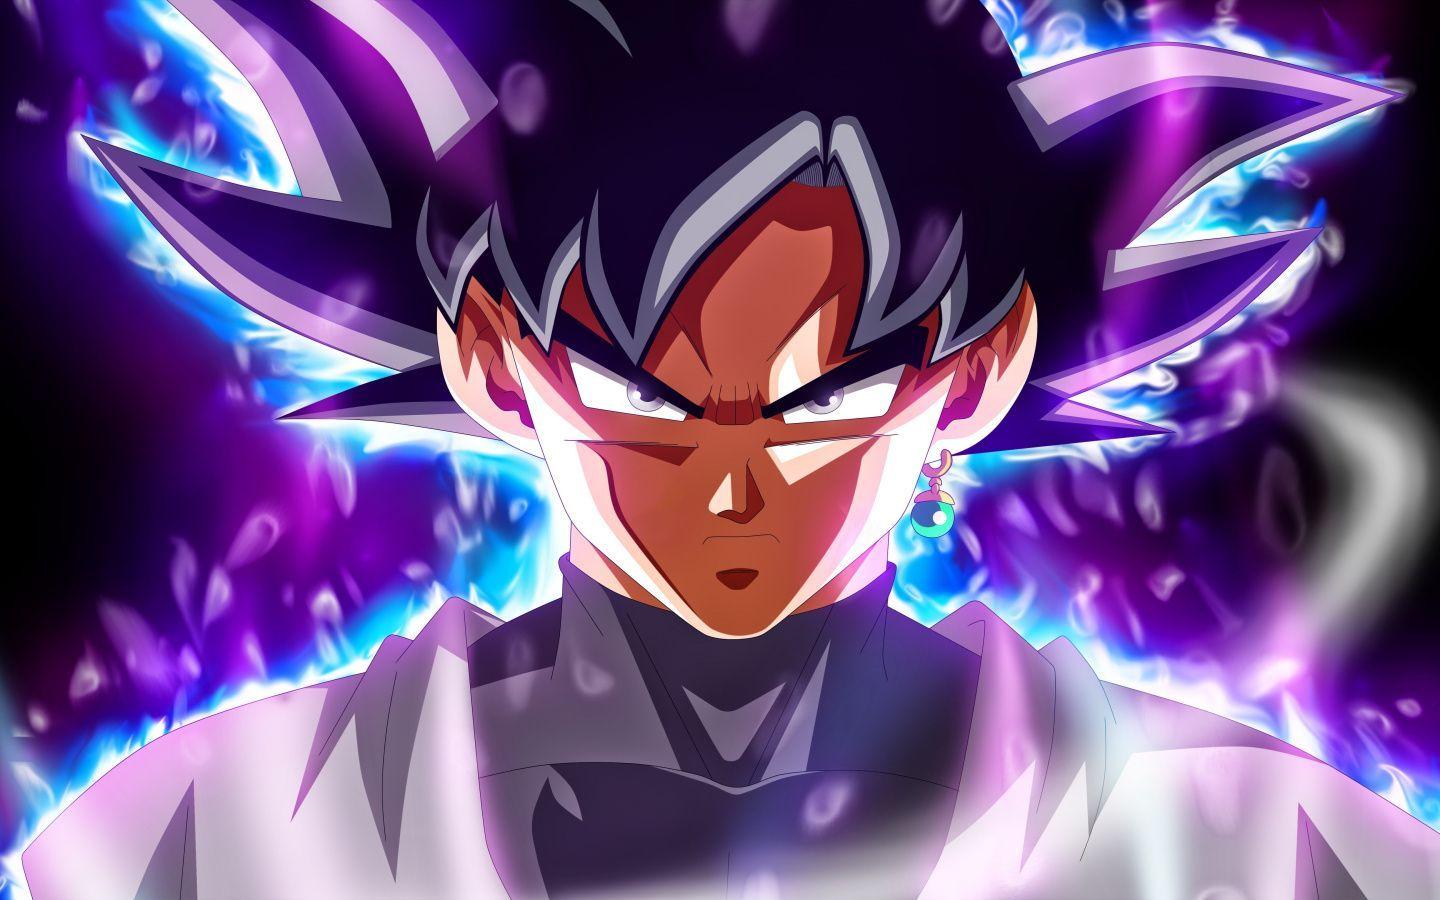 Dragon Ball FighterZs Chibi Ultra Instinct Goku Revealed